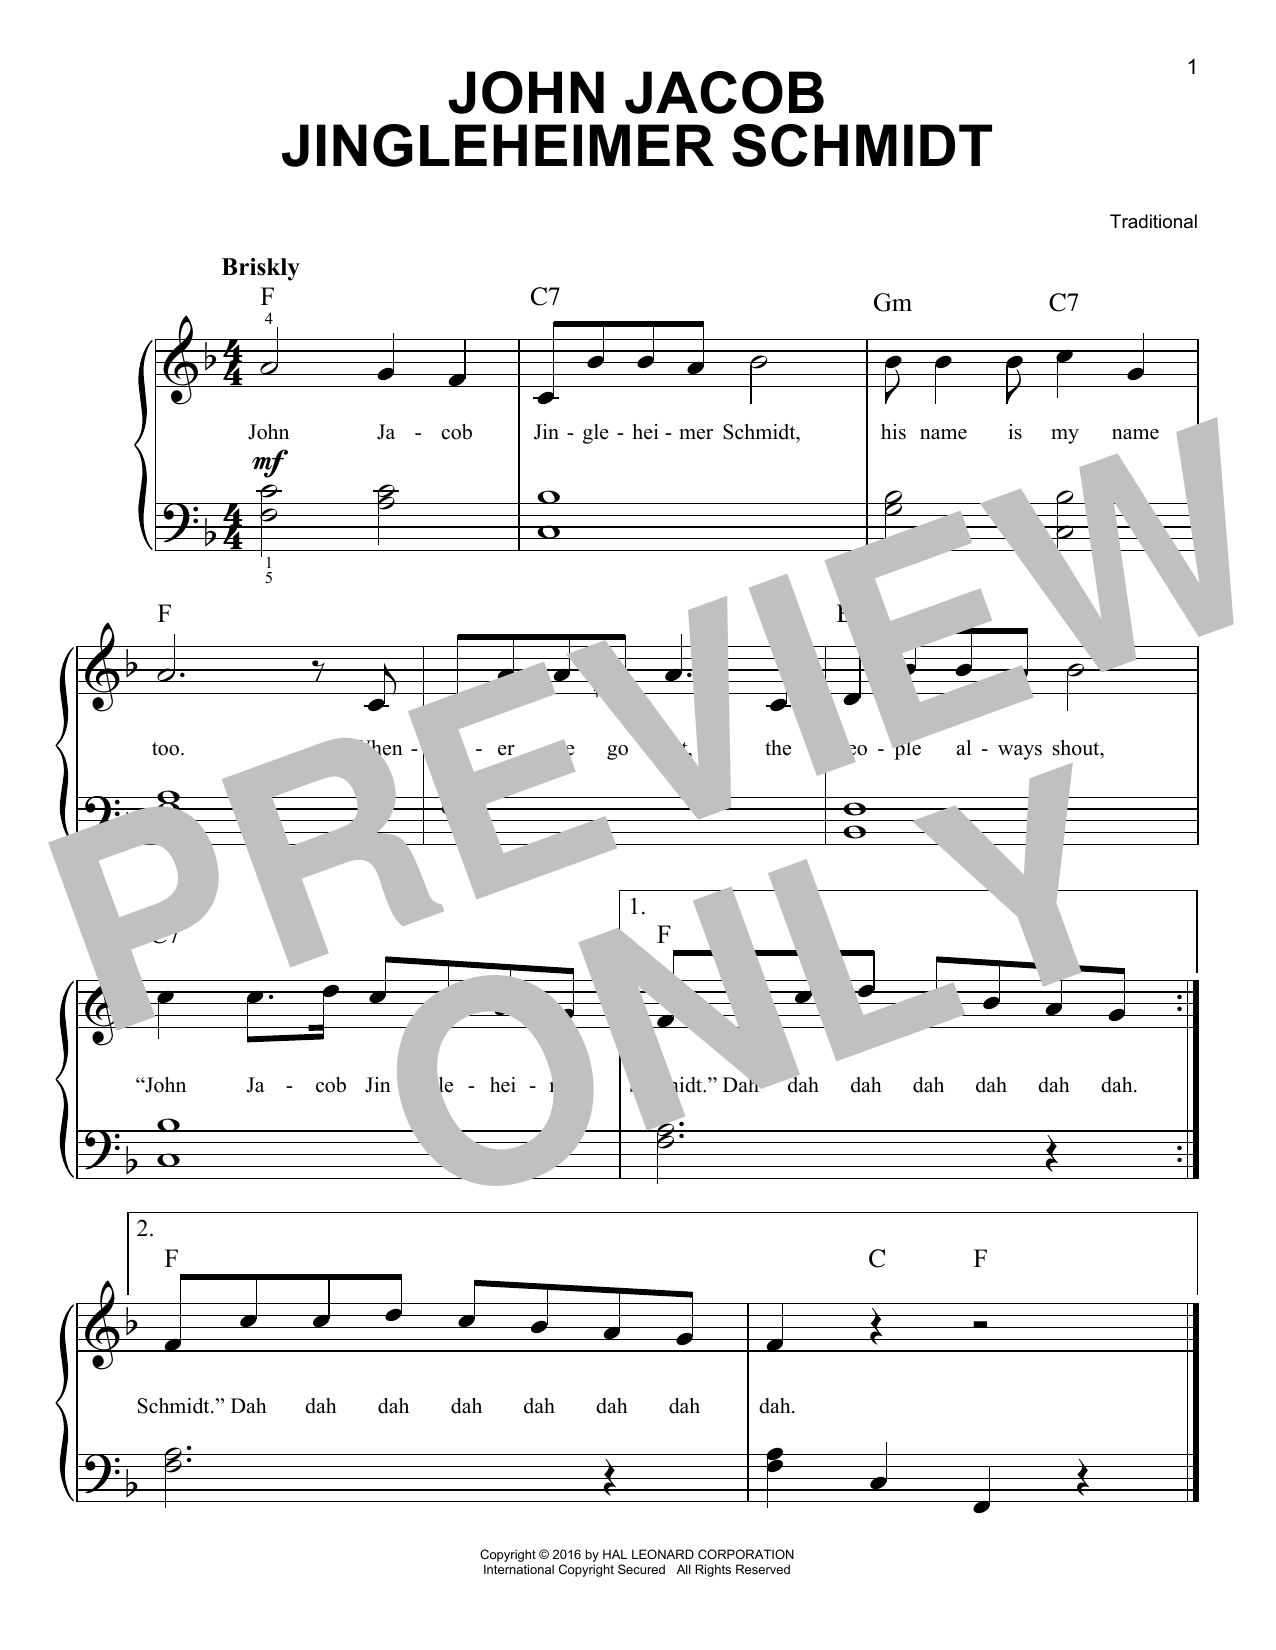 Traditional John Jacob Jingleheimer Schmidt Sheet Music Notes & Chords for Melody Line, Lyrics & Chords - Download or Print PDF